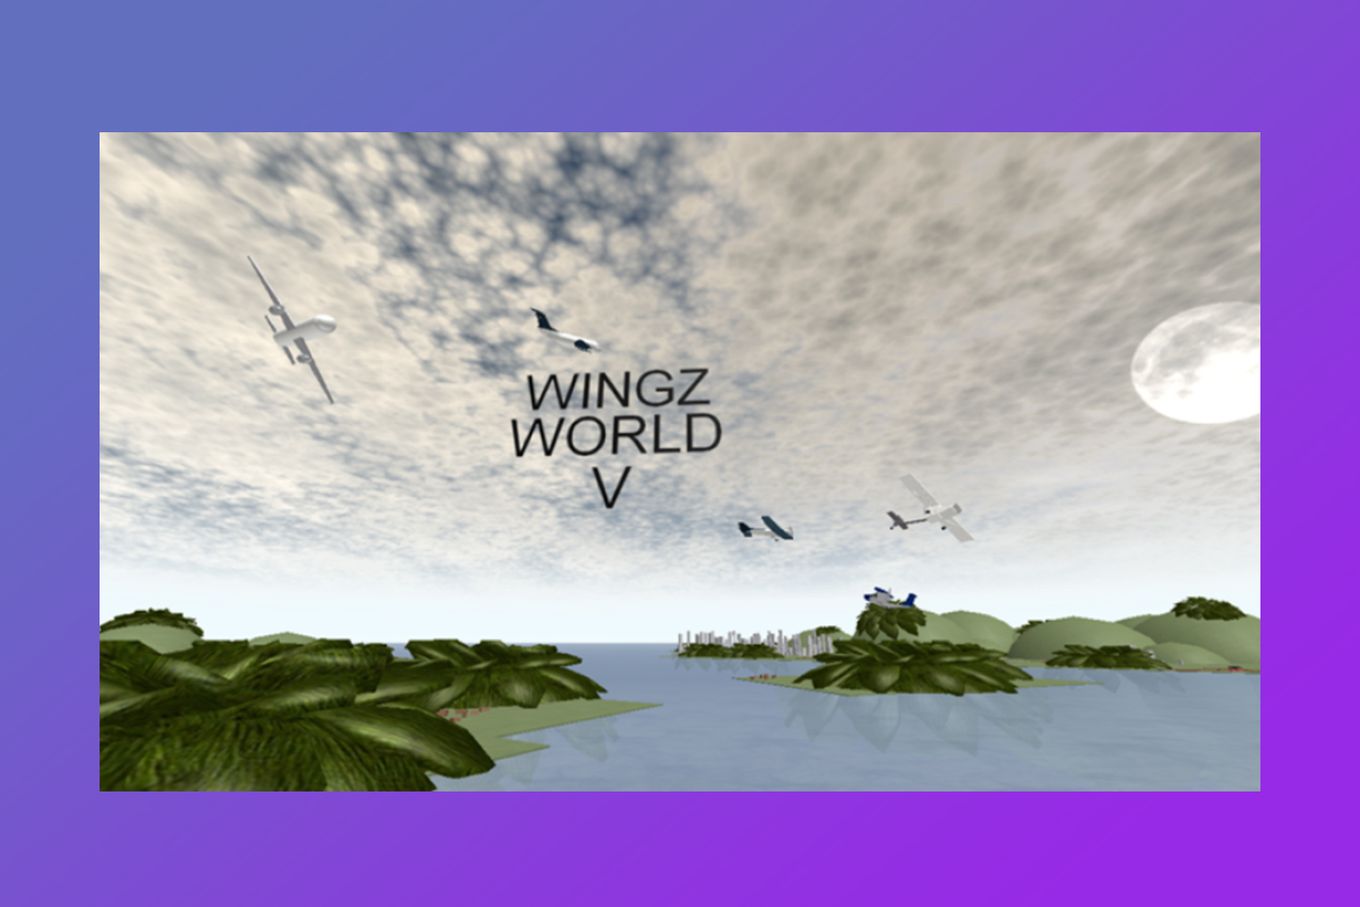 Classic Roblox Games - Wingz World